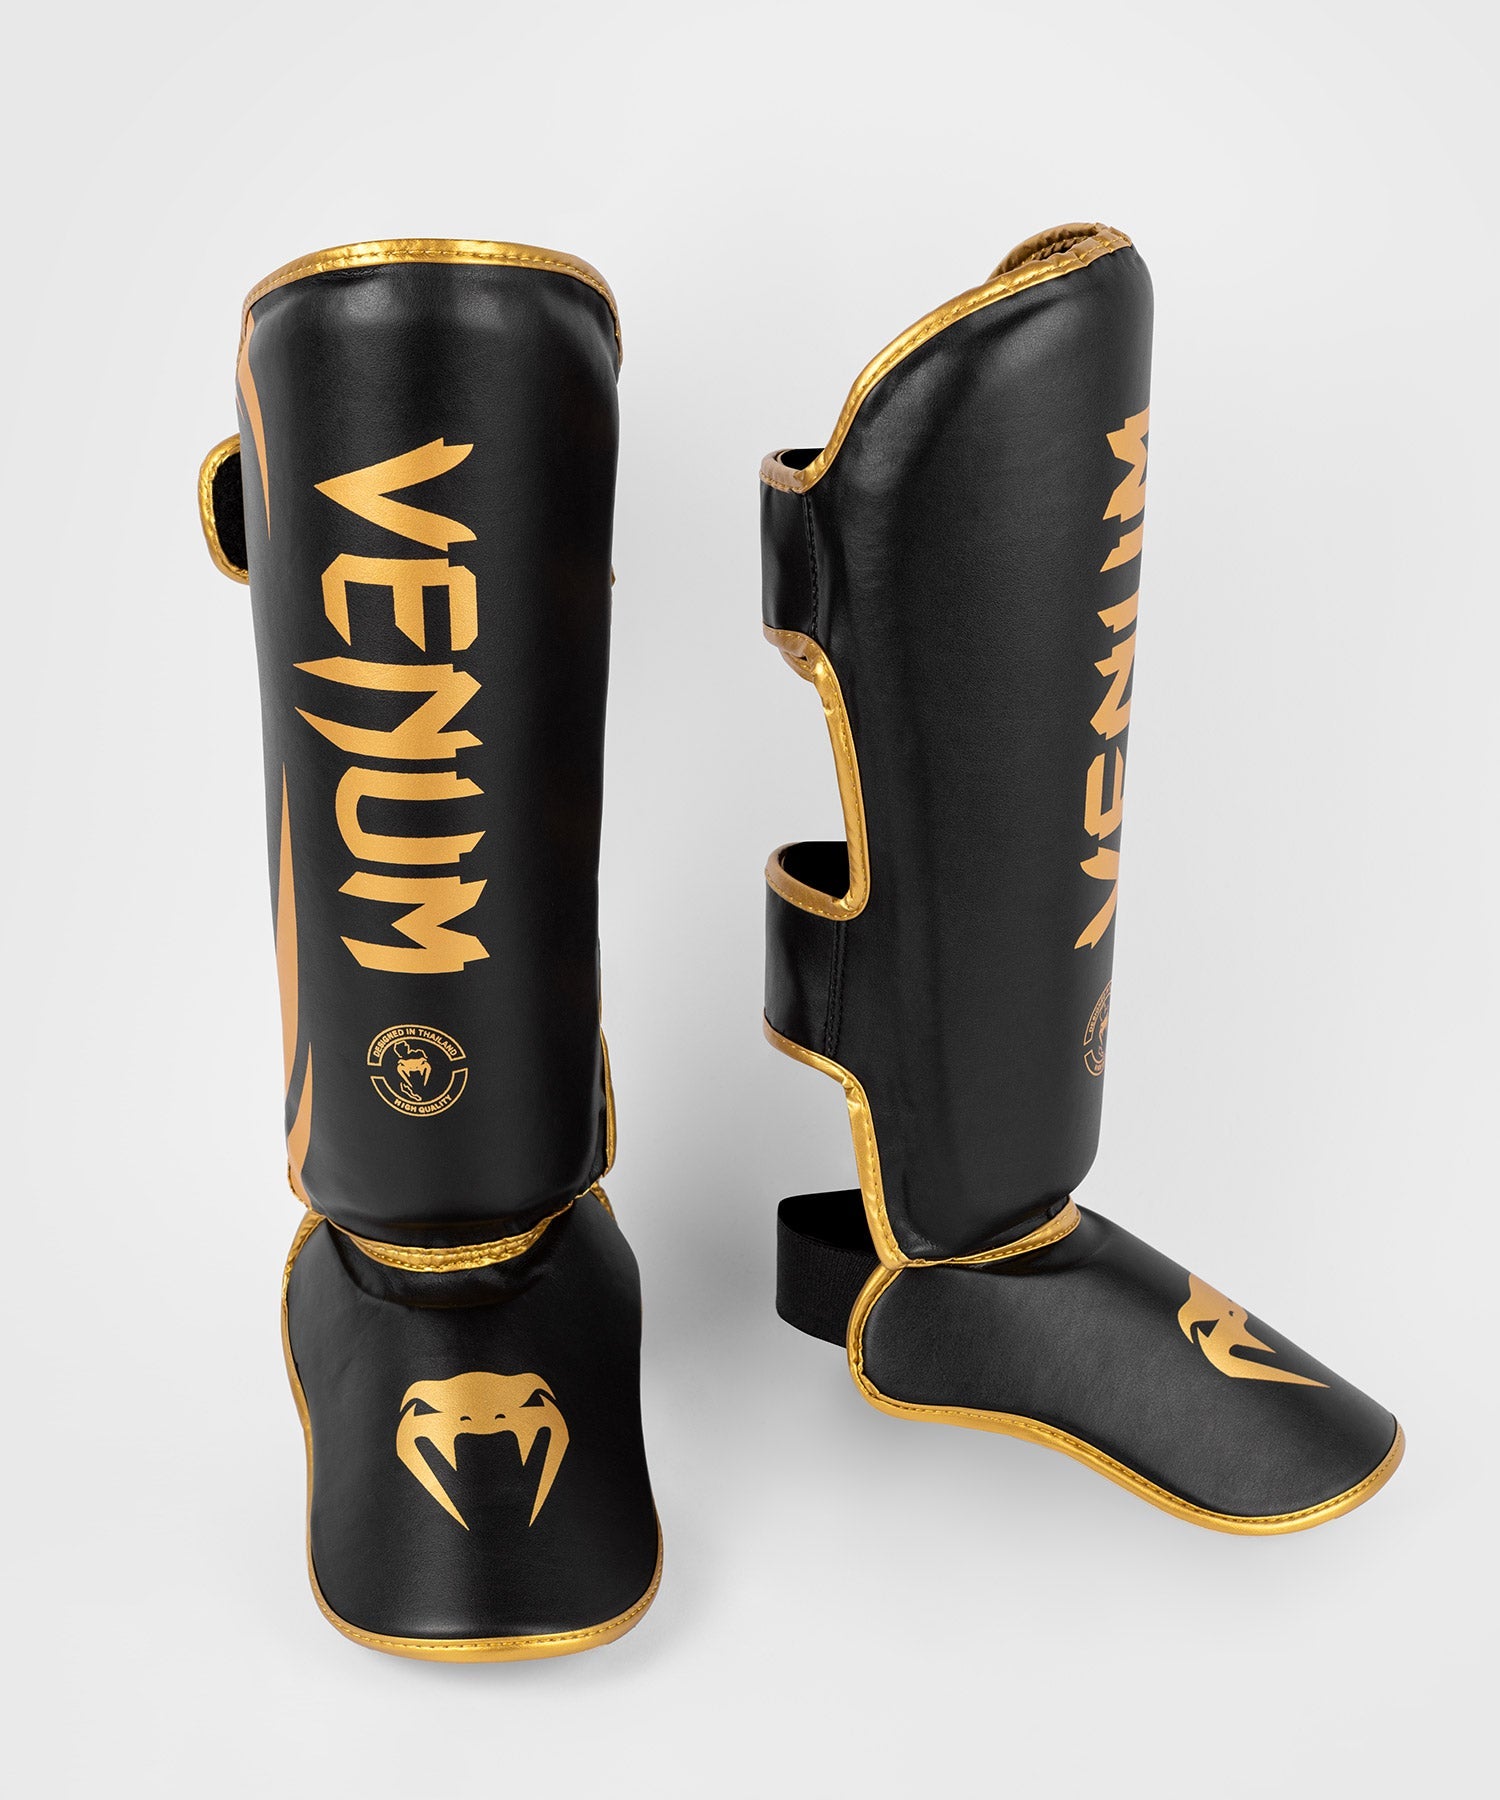 Venum Elite Shinguards - Black/Gold - M, Shin Guards -  Canada